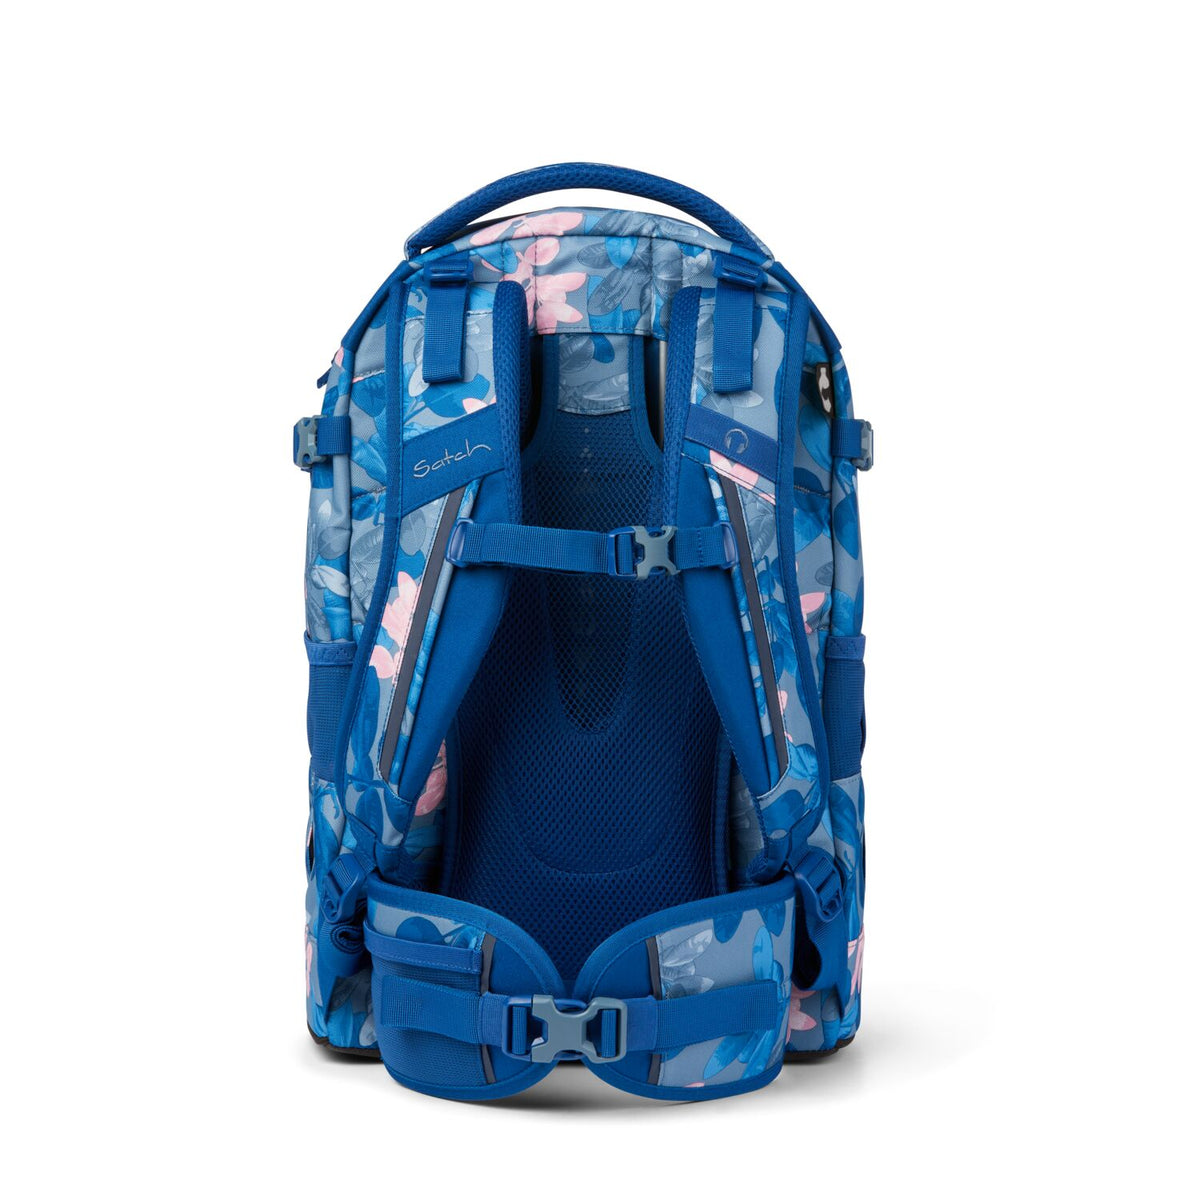 Satch school backpack for teenage girls